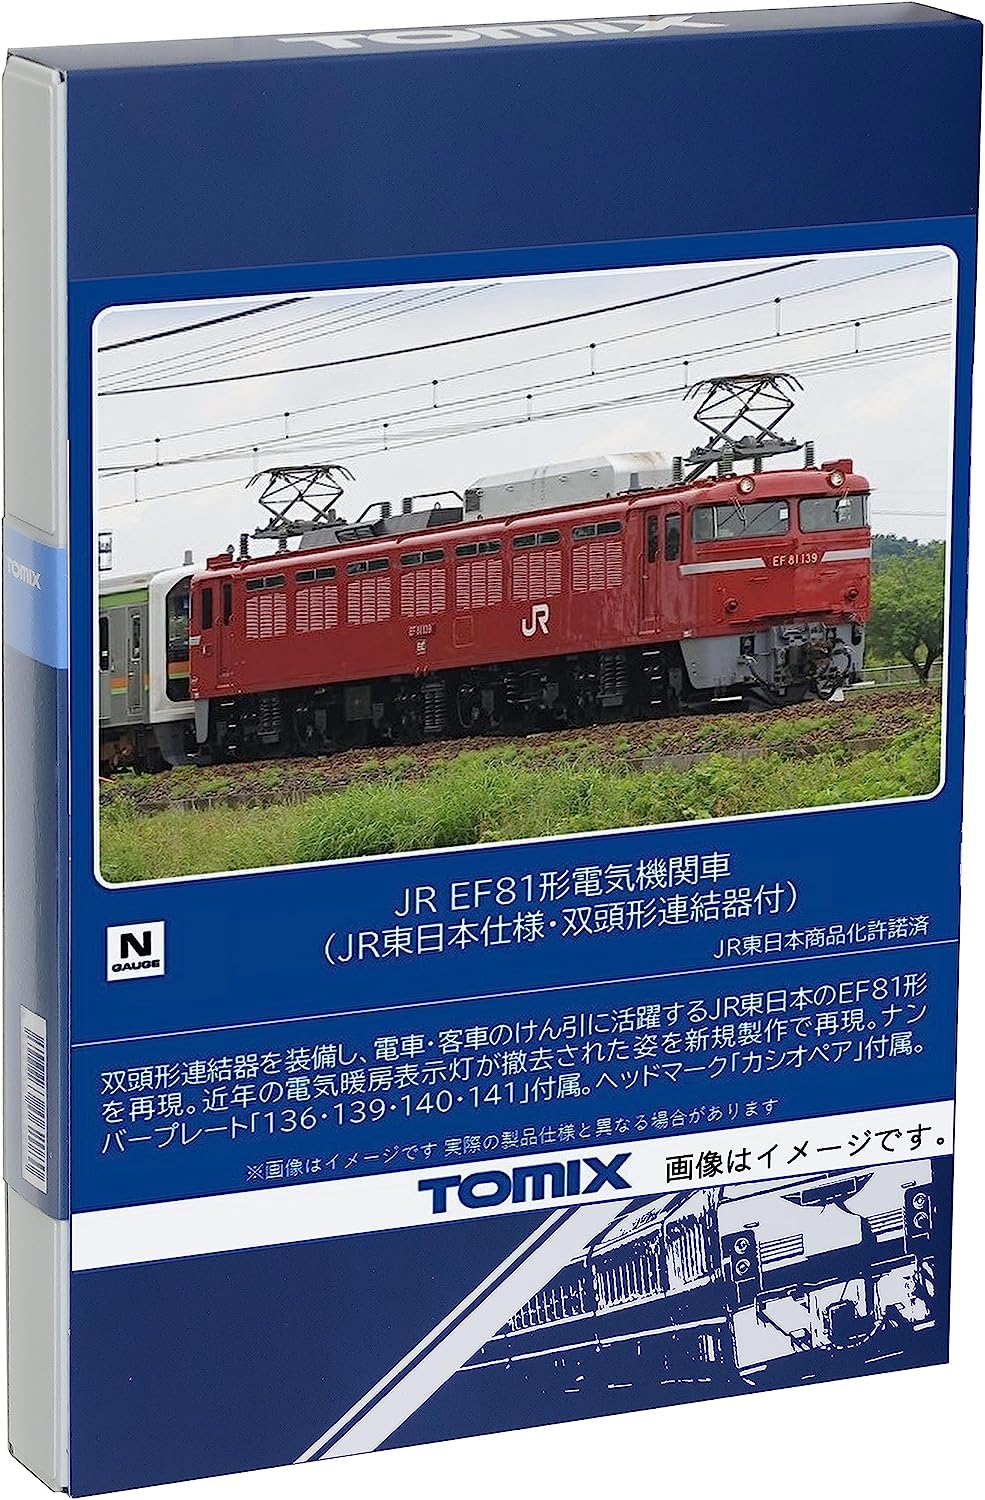 [PO DEC 2023] 7173 J.R. Electric Locomotive Type EF81 (J.R. East